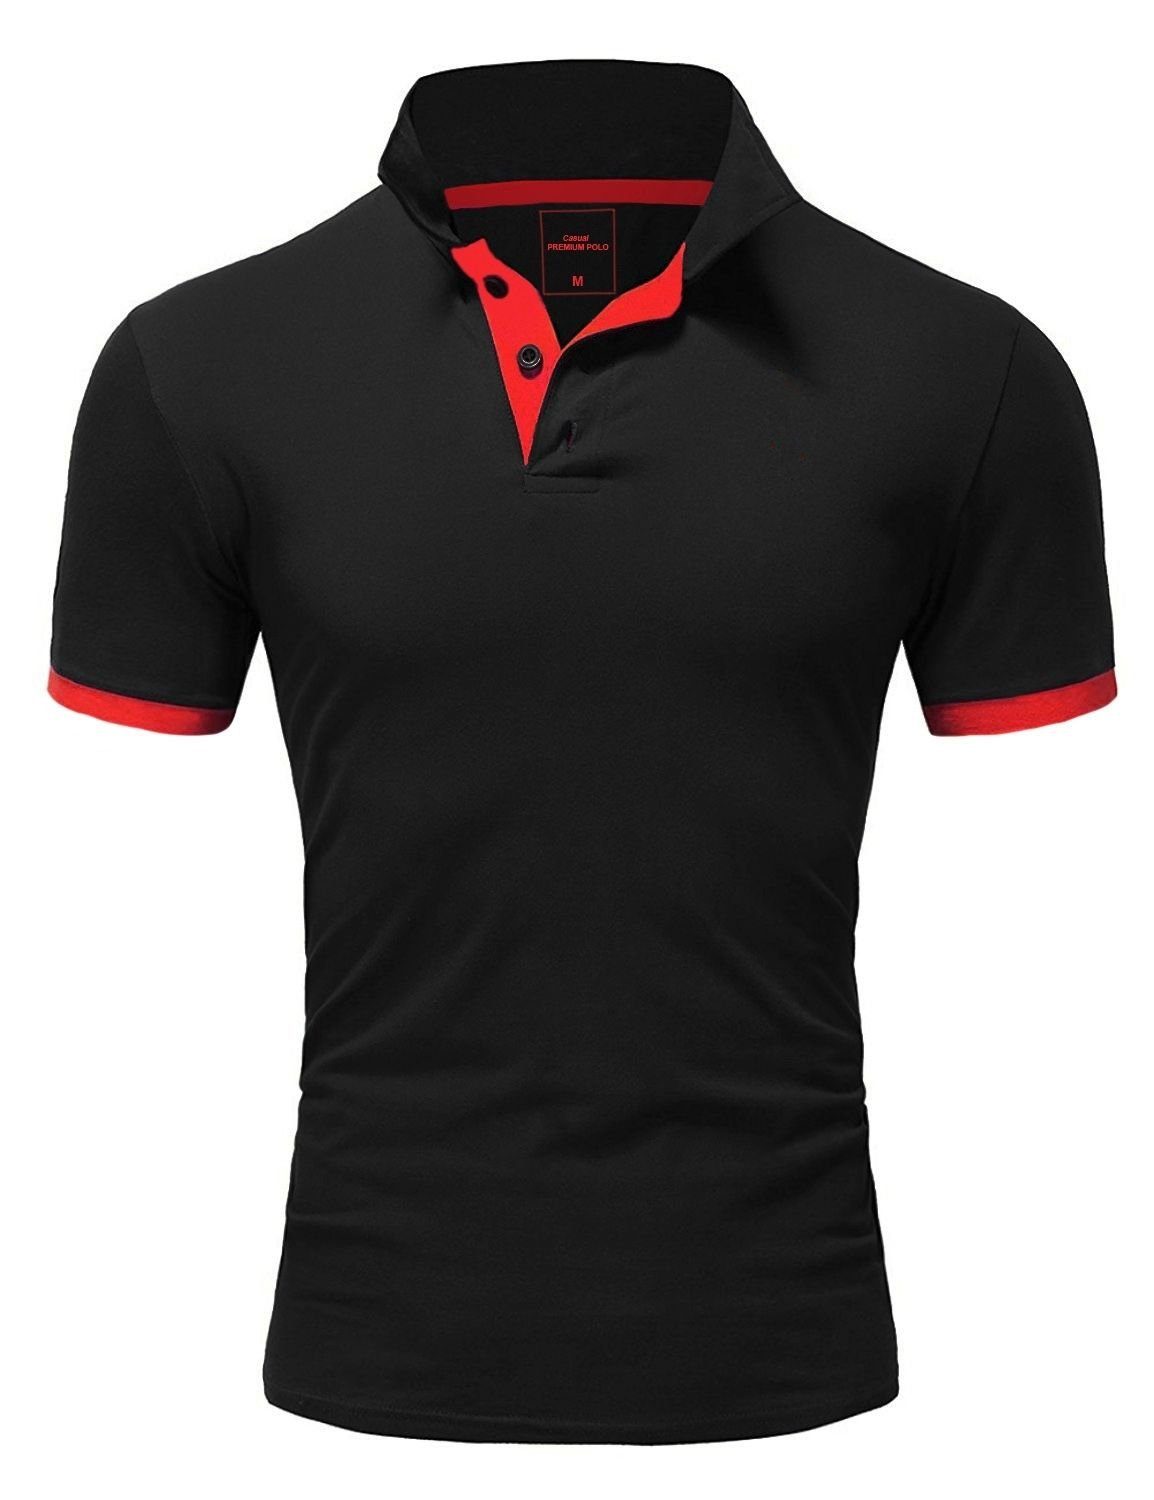 behype Details kontrastfarbigen BASE Poloshirt mit schwarz-rot